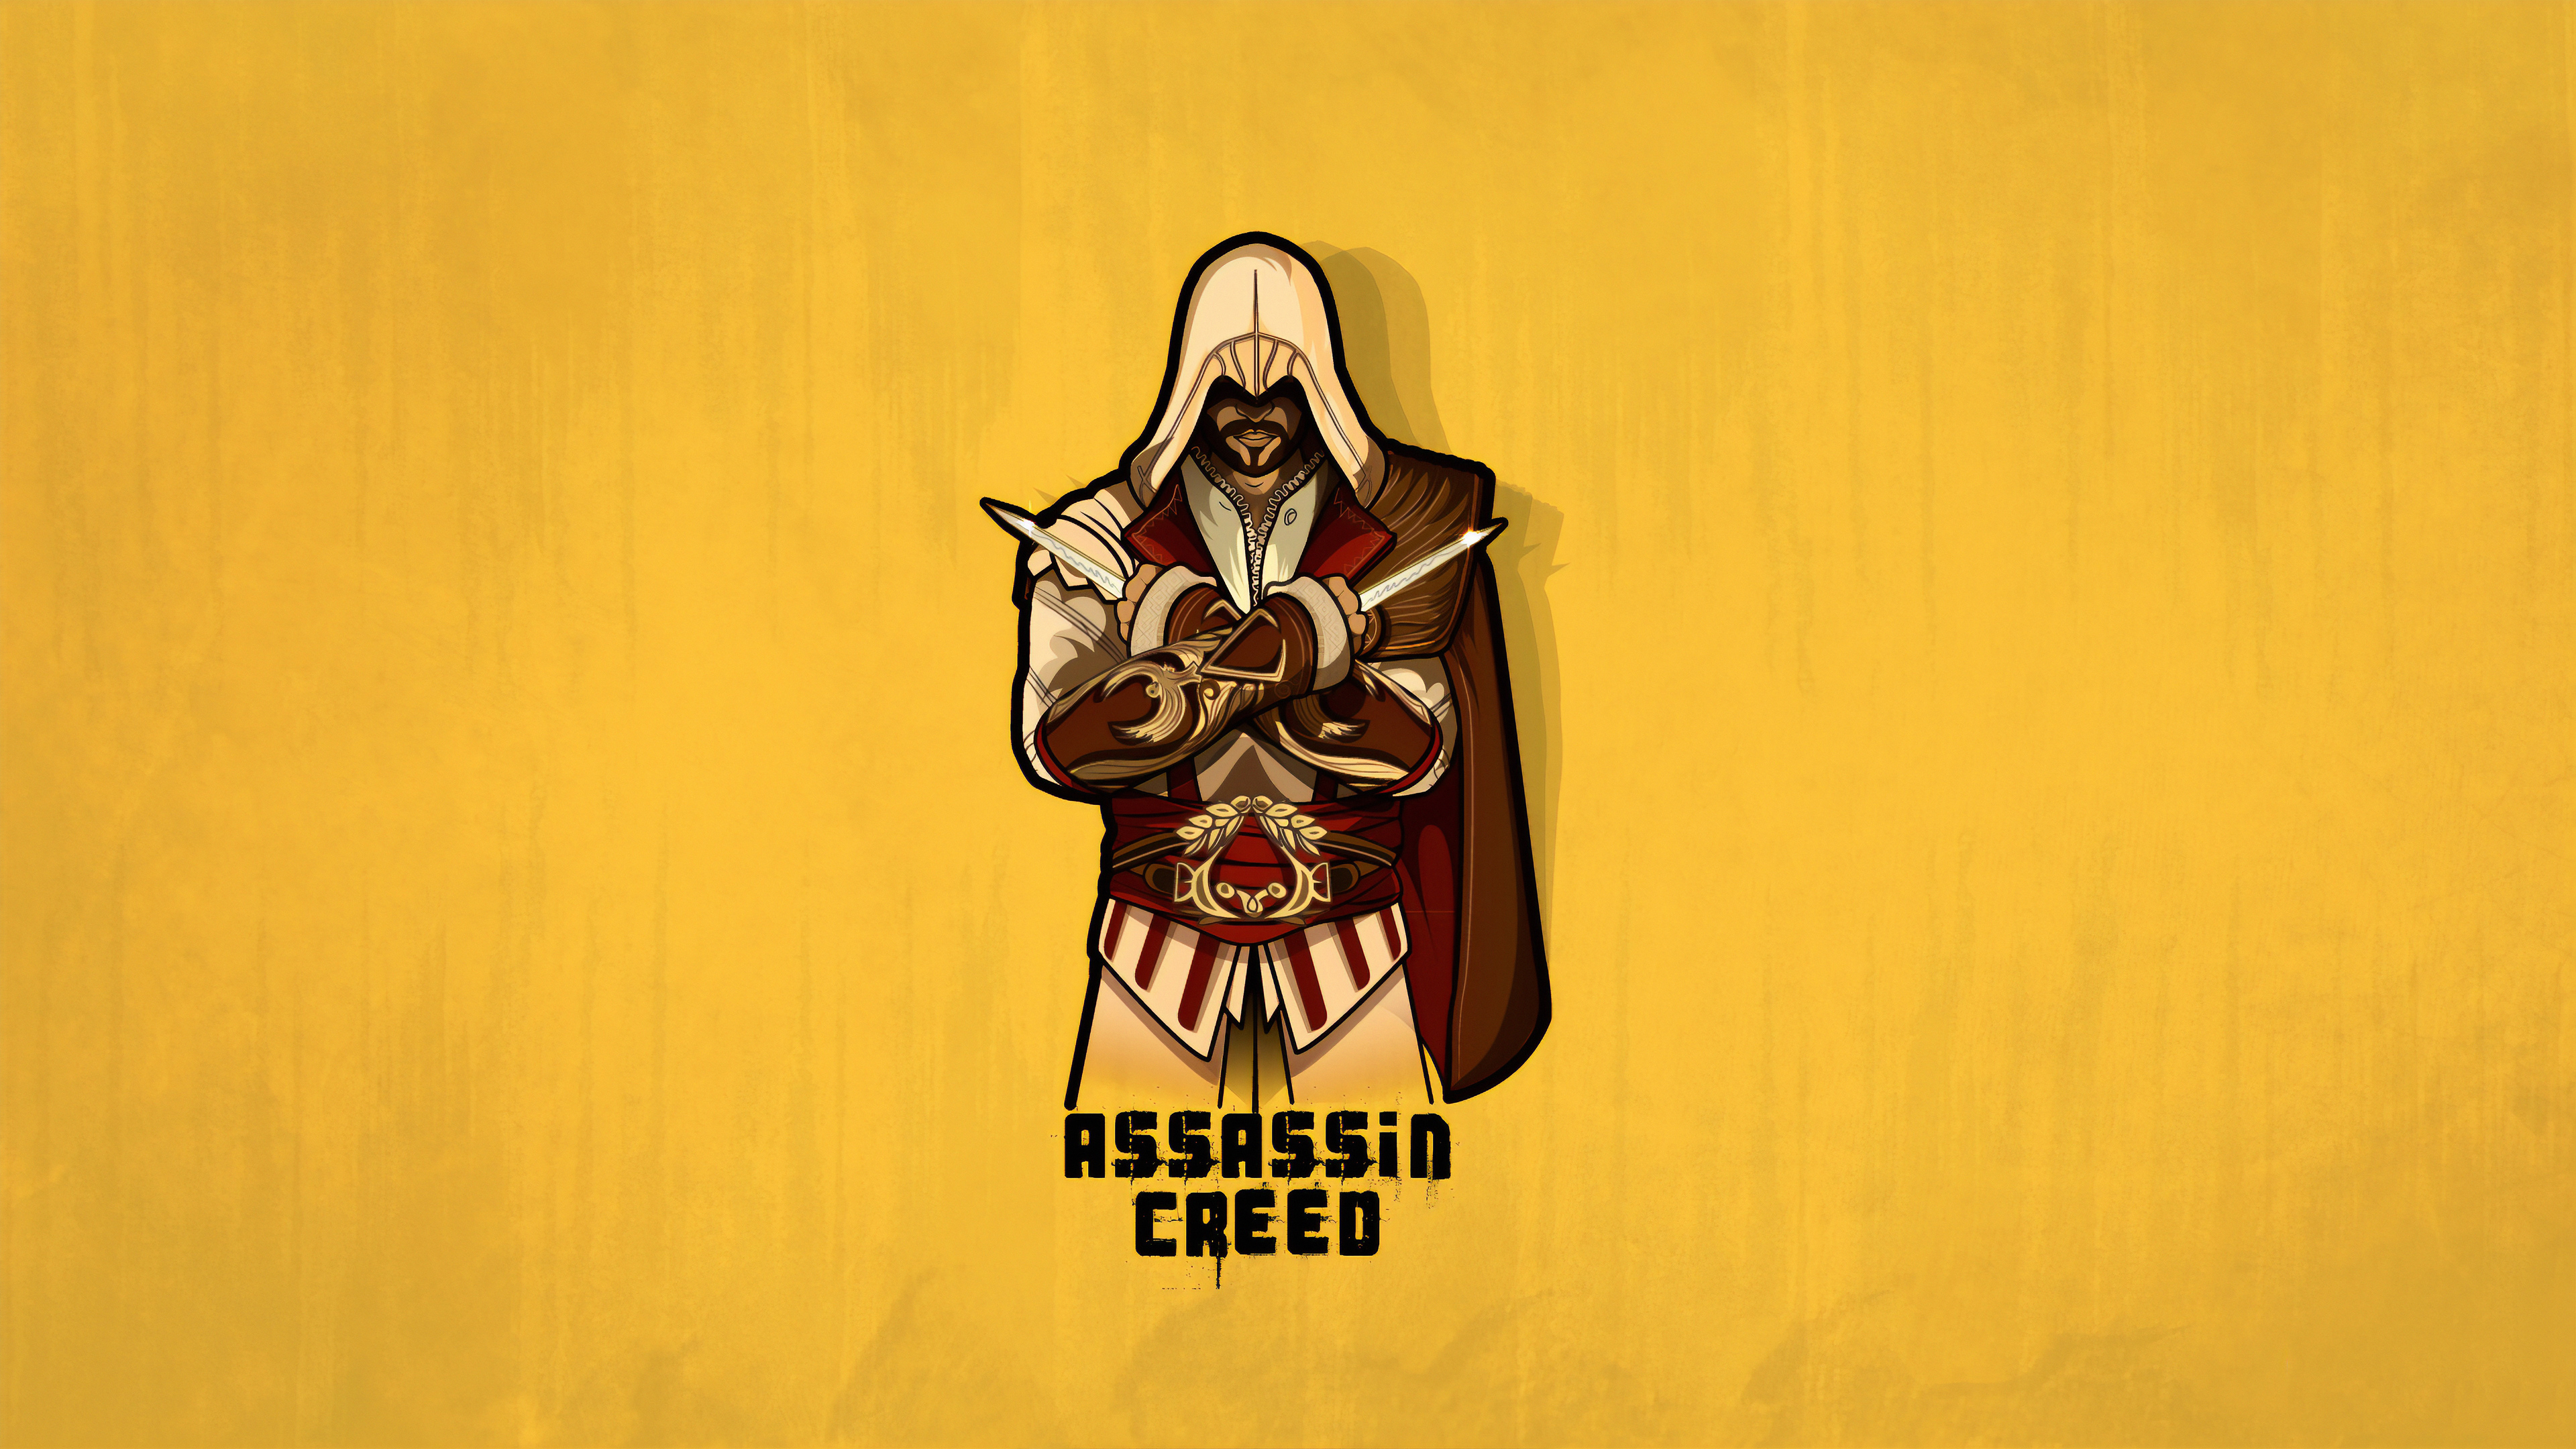 Assassins Creed Minimalist 4K Art Wallpaper, HD Games 4K Wallpapers